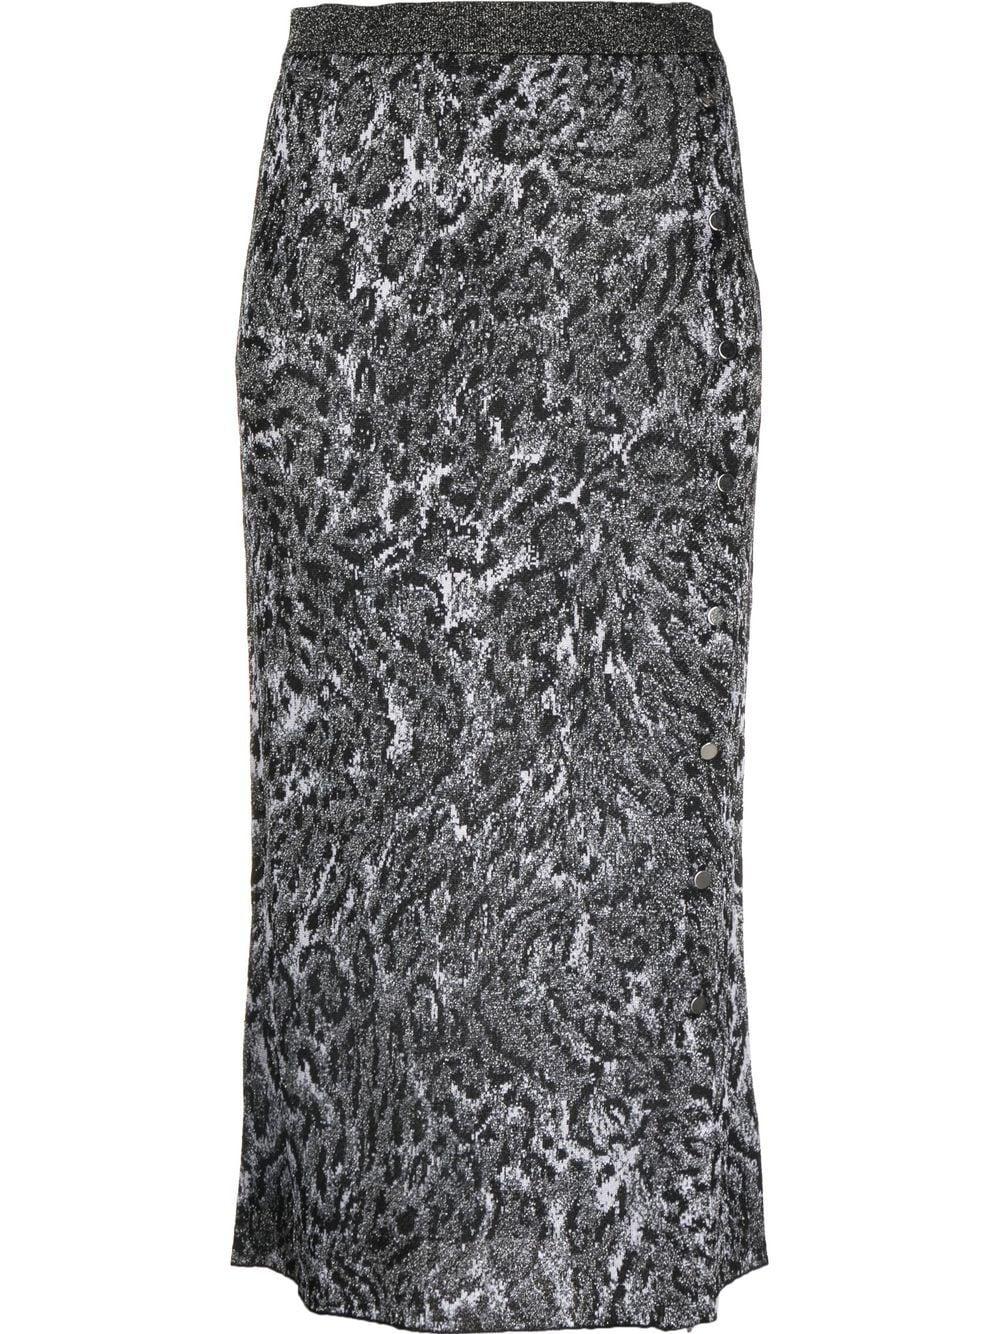 Paco Rabanne Leopard-pattern Knit Midi Skirt in Black | Lyst